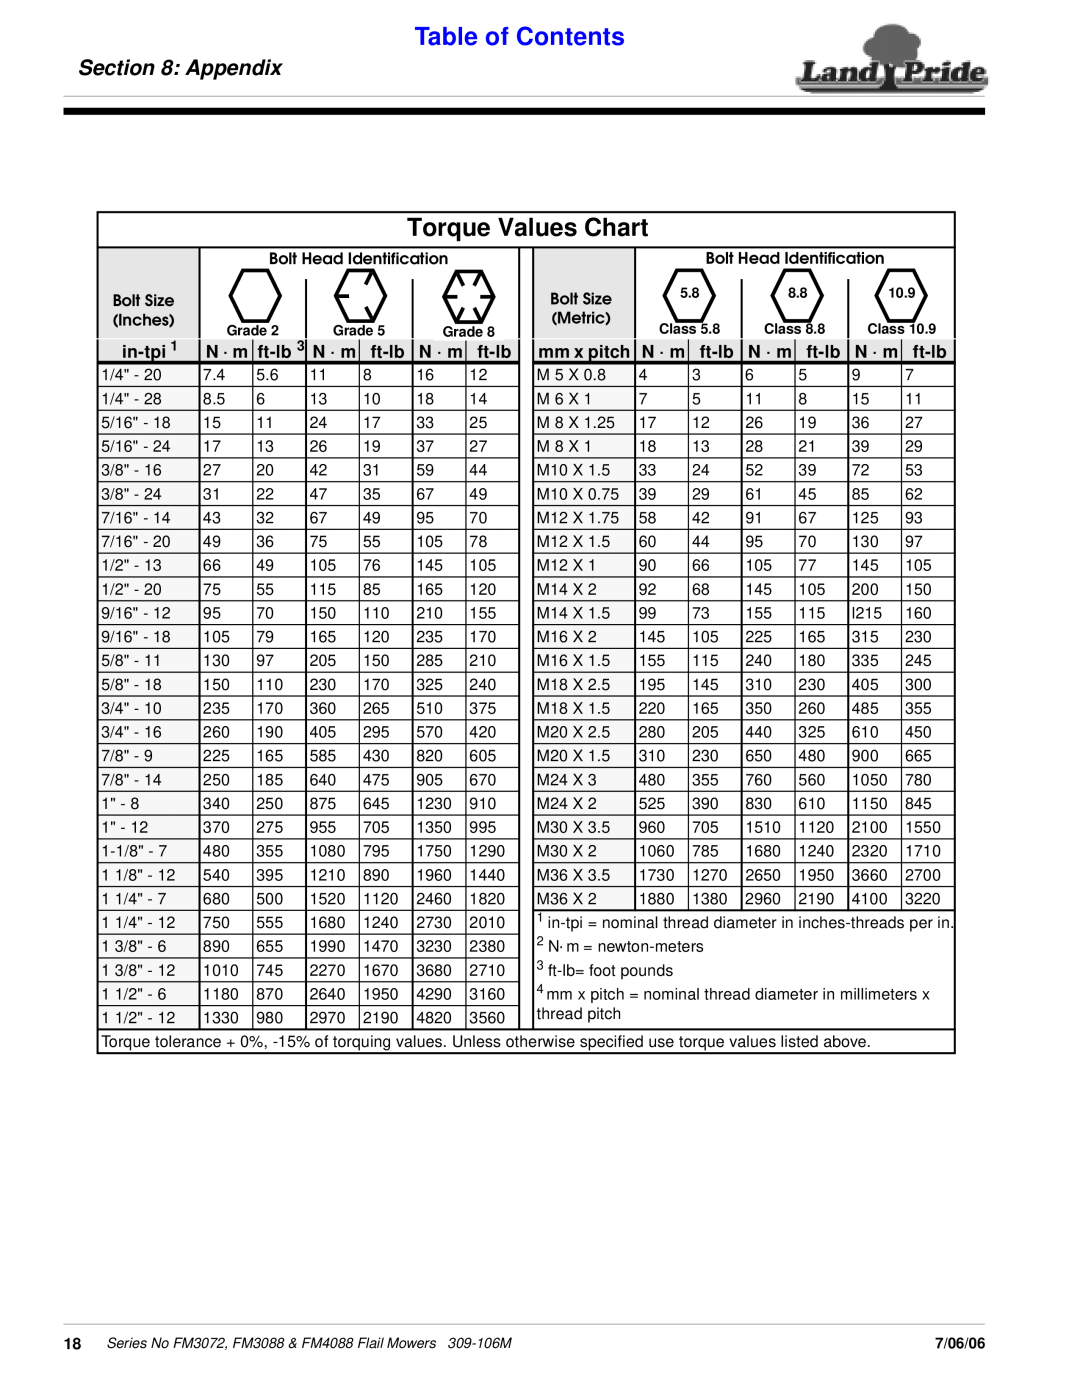 Land Pride FM4088, FM3072 manual Torque Values Chart, Appendix, in-tpi, N · m, ft-lb, mm x pitch, Table of Contents 